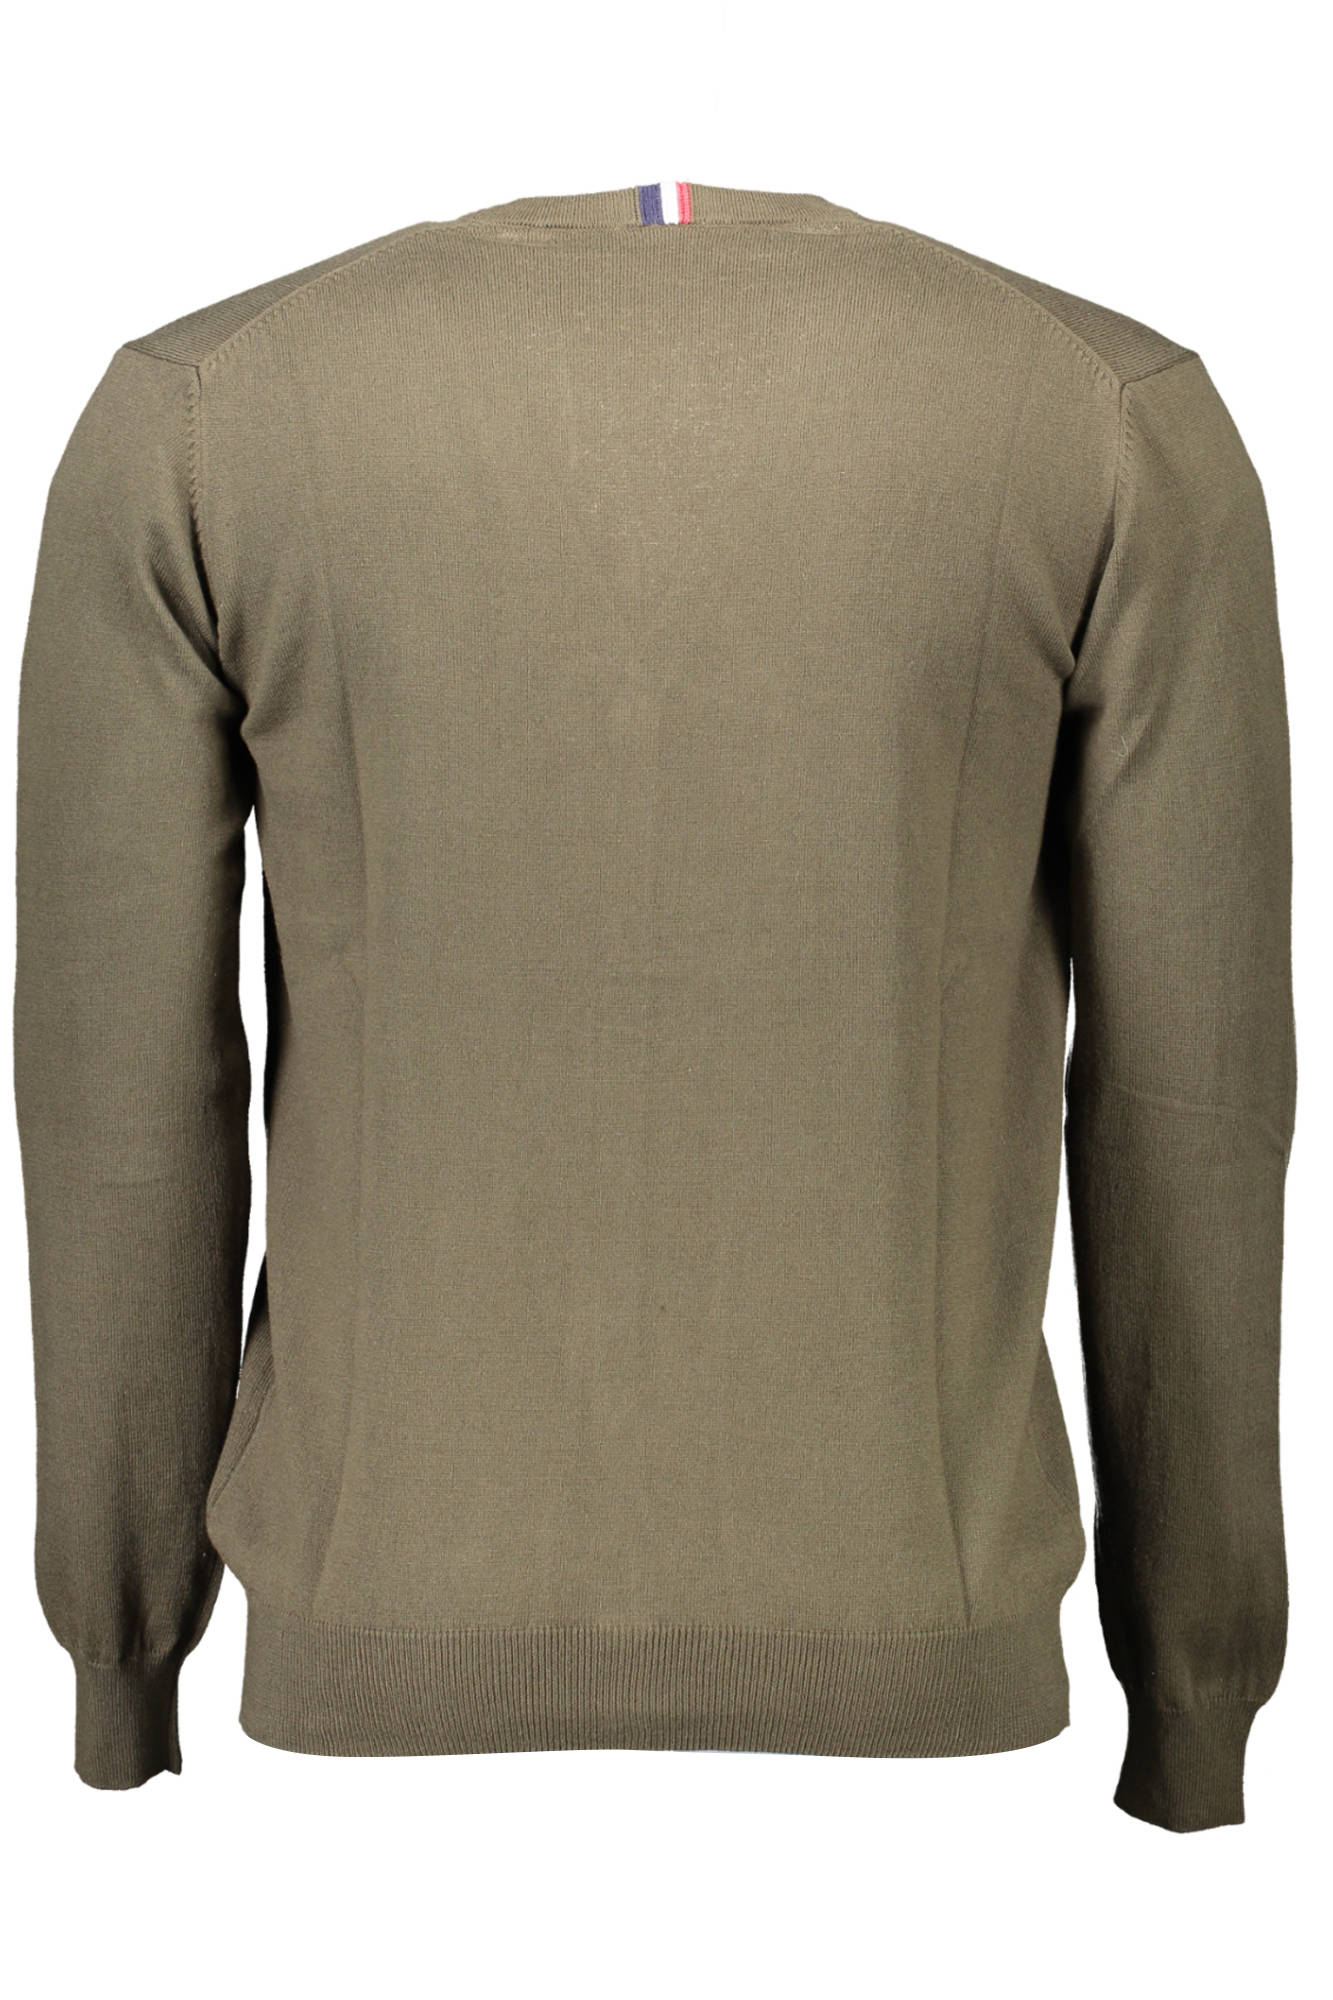 U.S. POLO ASSN. Green Cotton Sweater - Fizigo